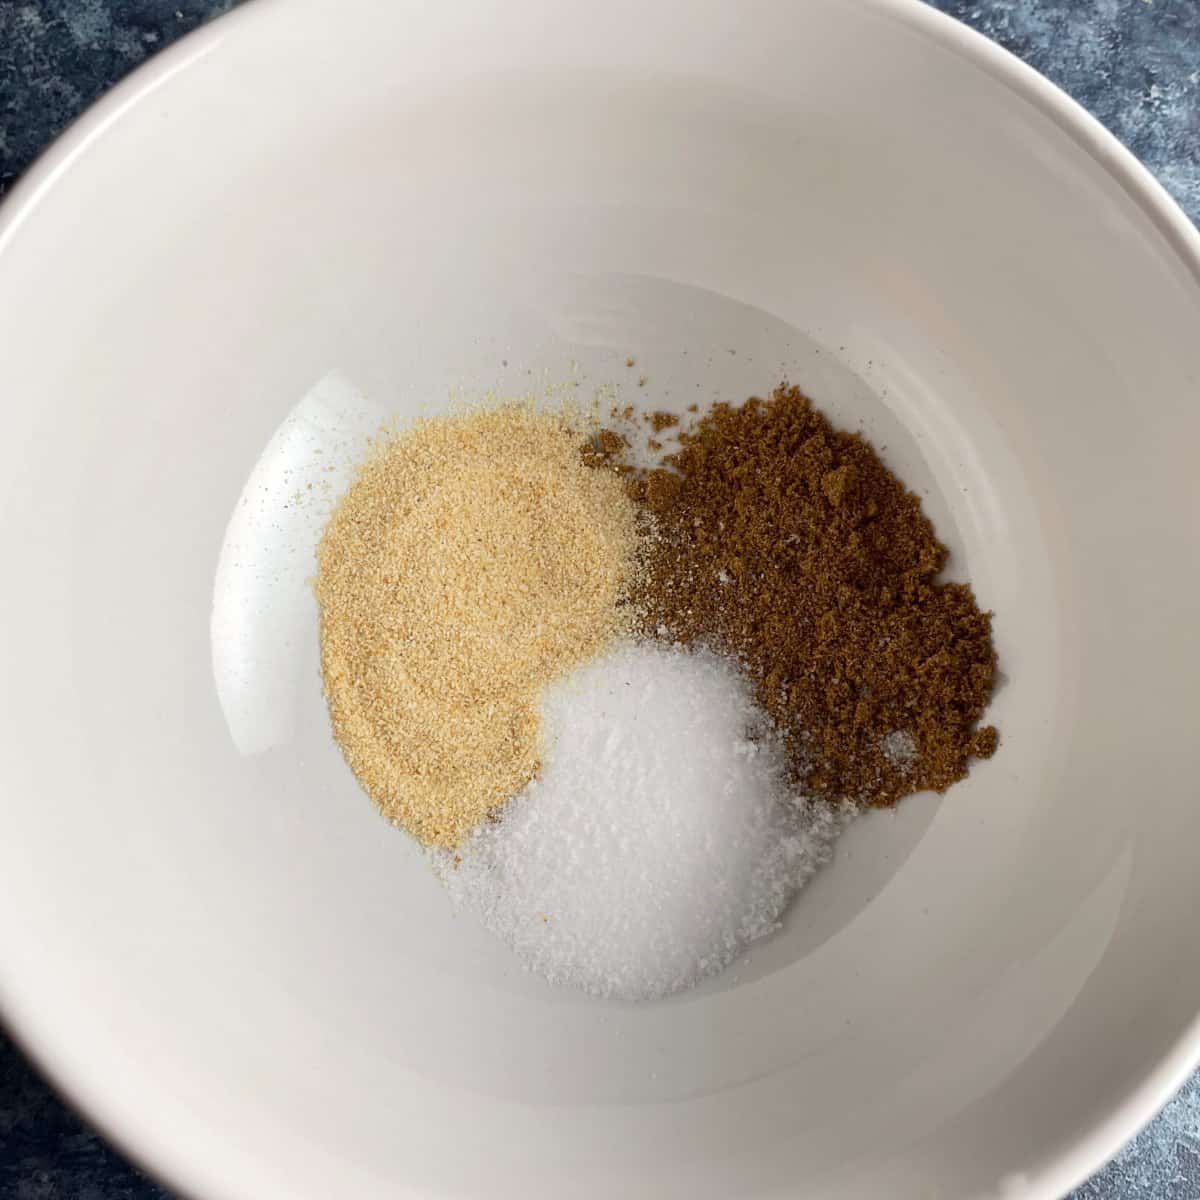 garlic powder, cumin and salt in a white bowl.